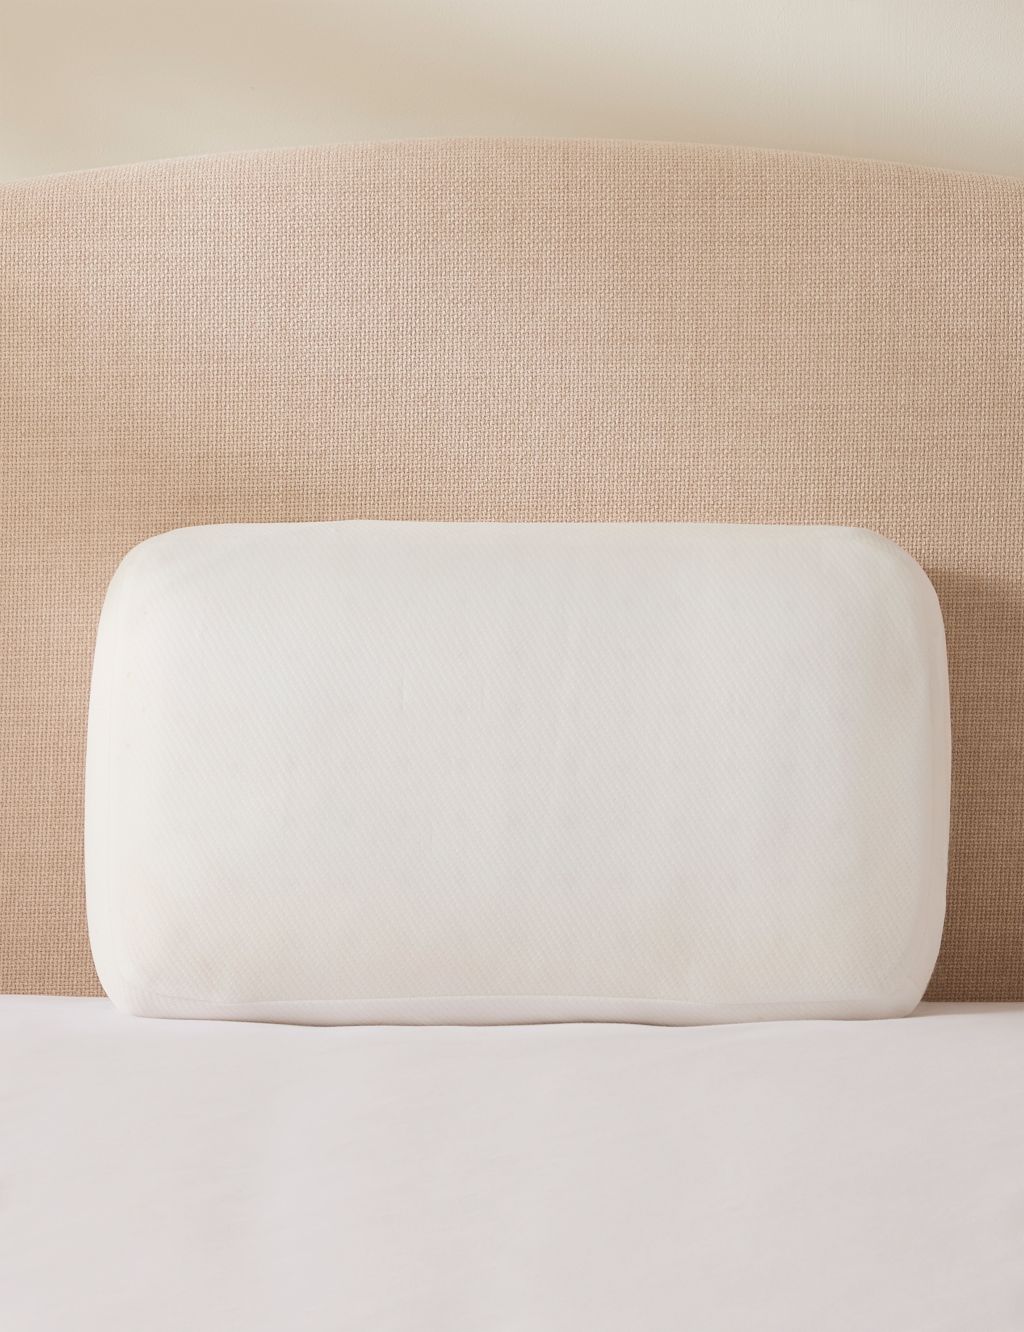 Sleep Solutions Side Sleeper Memory Foam Pillow image 2